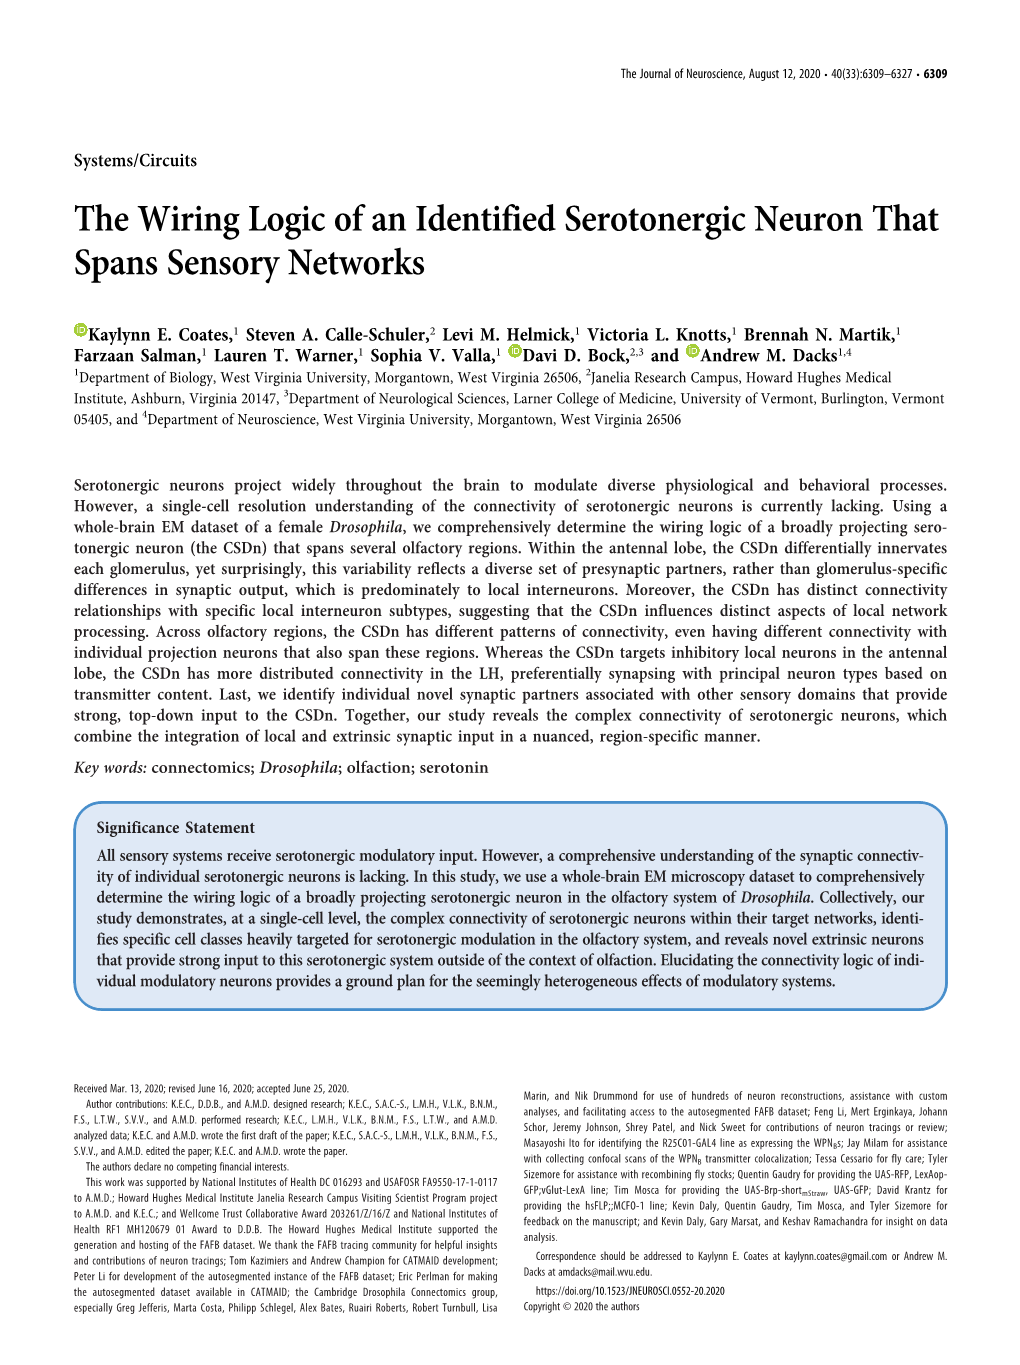 The Wiring Logic of an Identified Serotonergic Neuron That Spans Sensory Networks